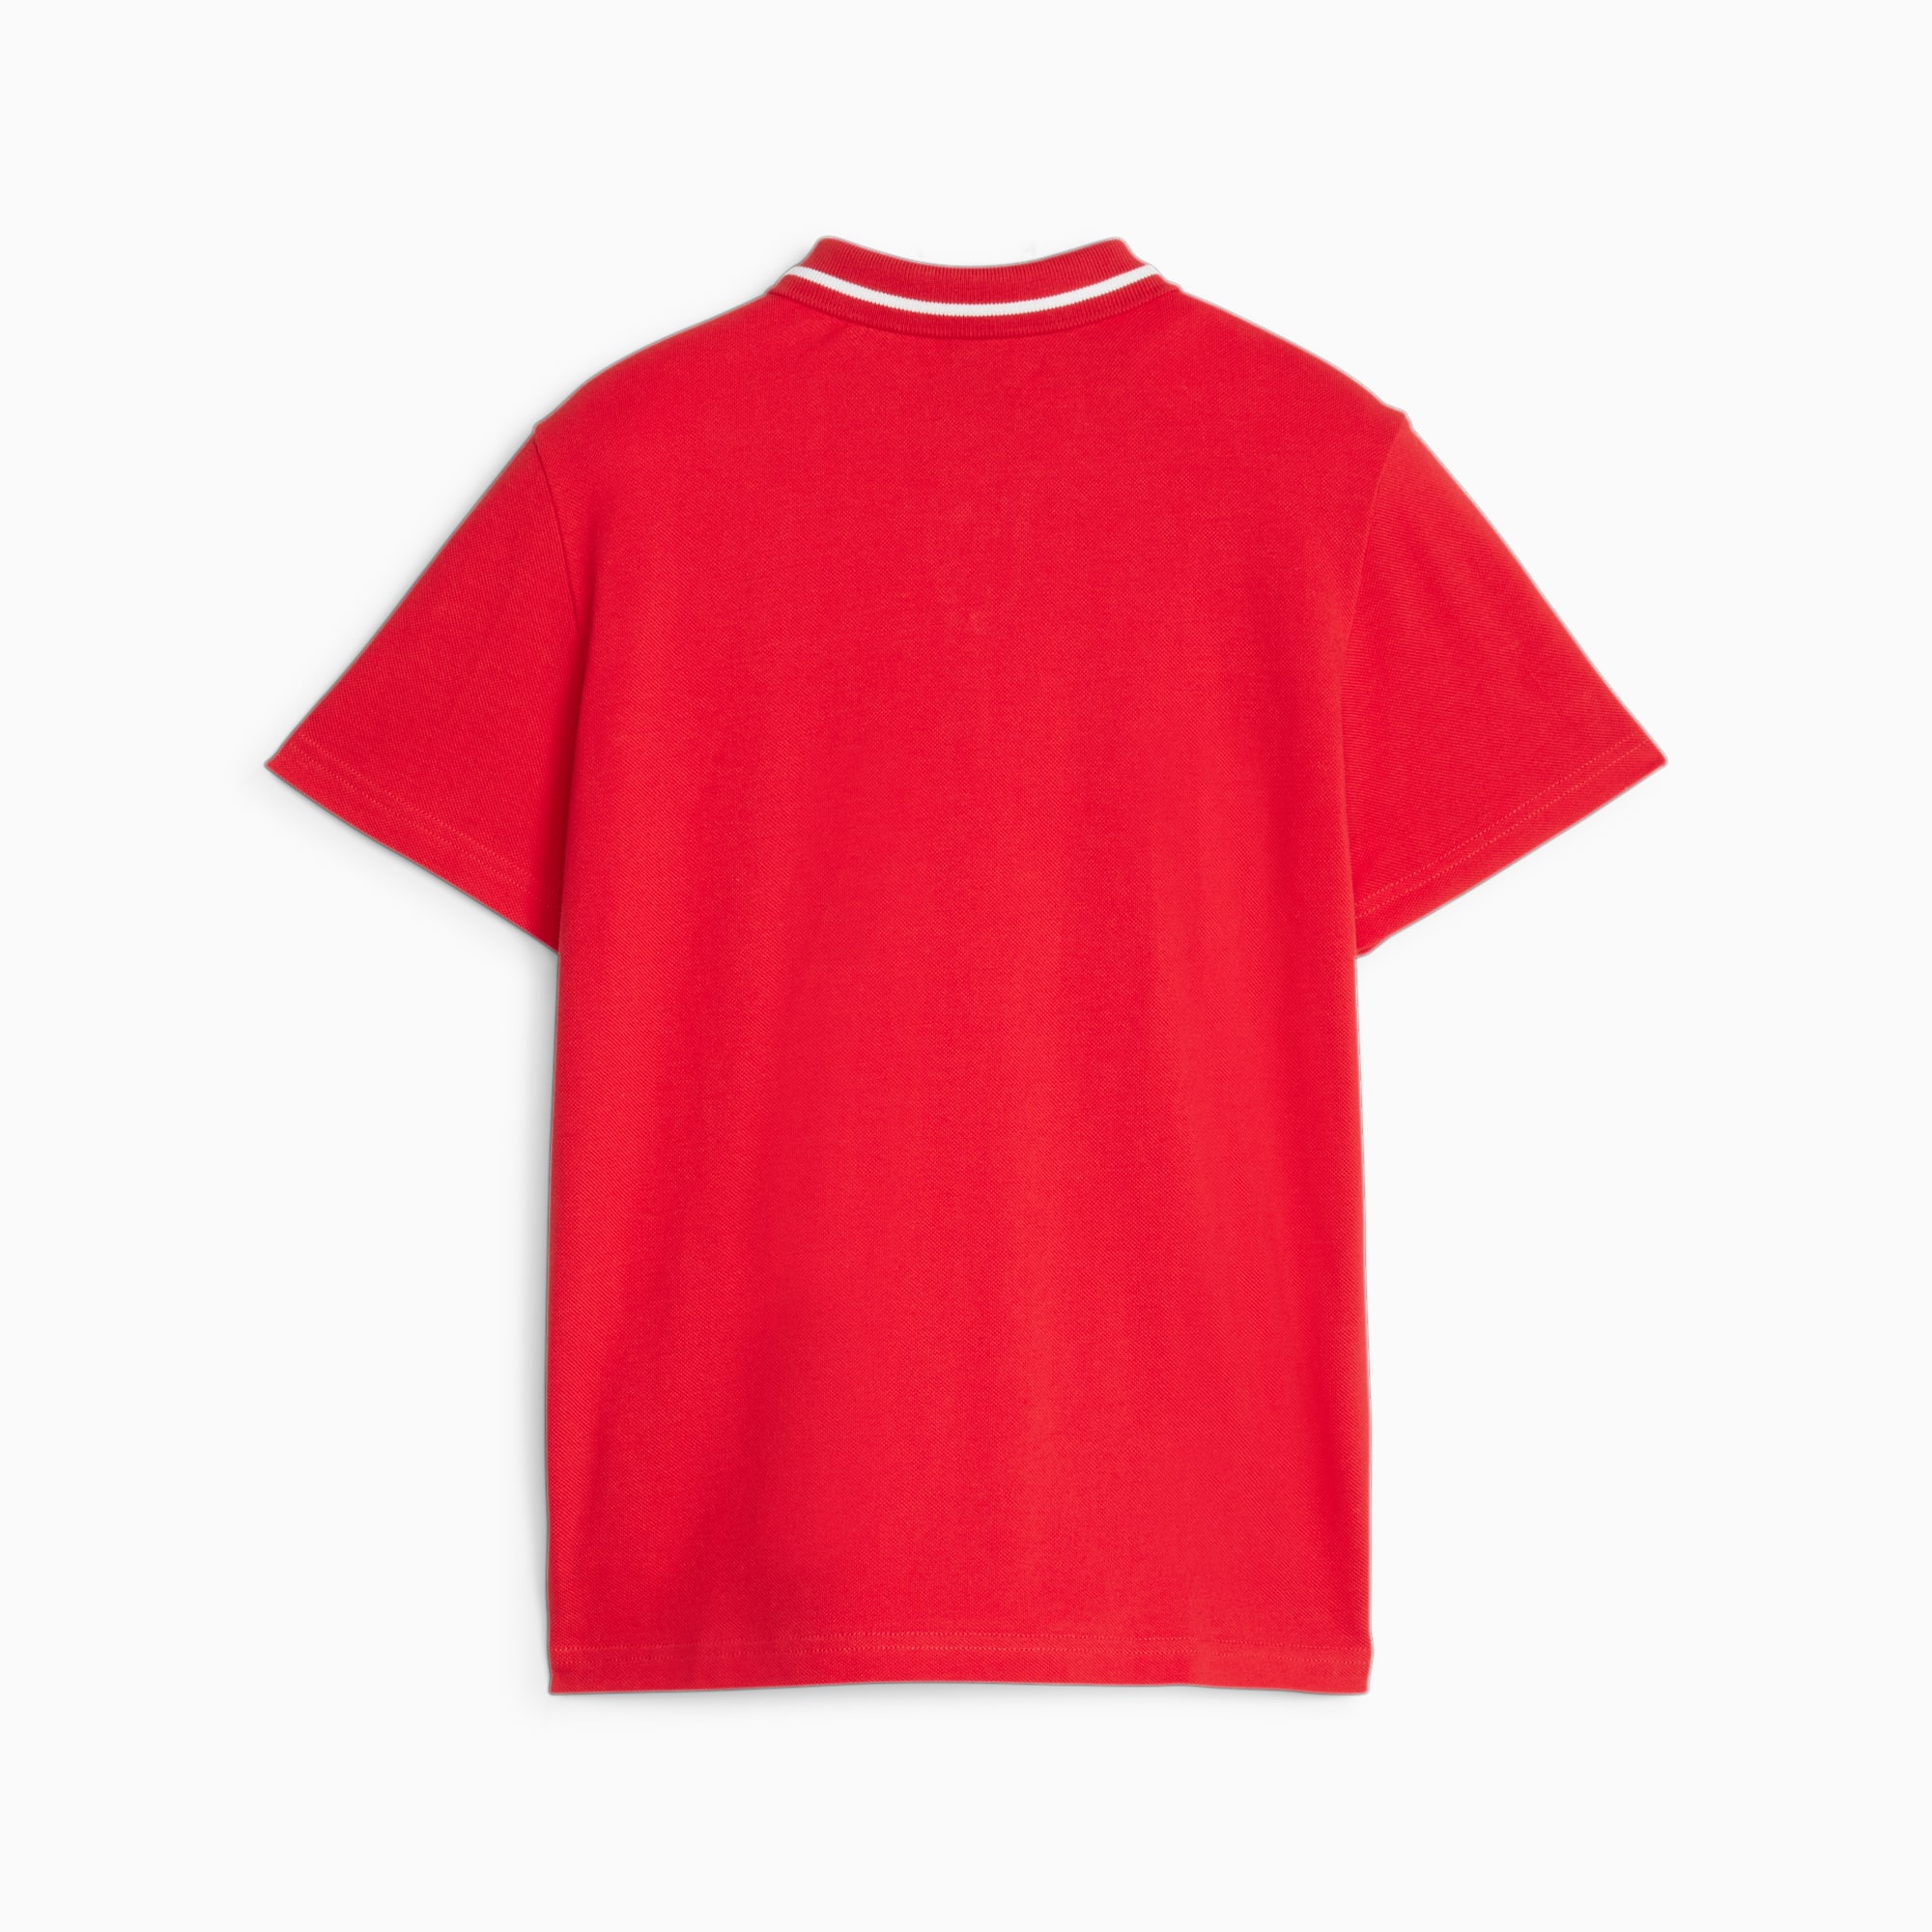 PUMA Scuderia Ferrari Poloshirt Teenager Für Kinder, Rot, Größe: 116, Kleidung